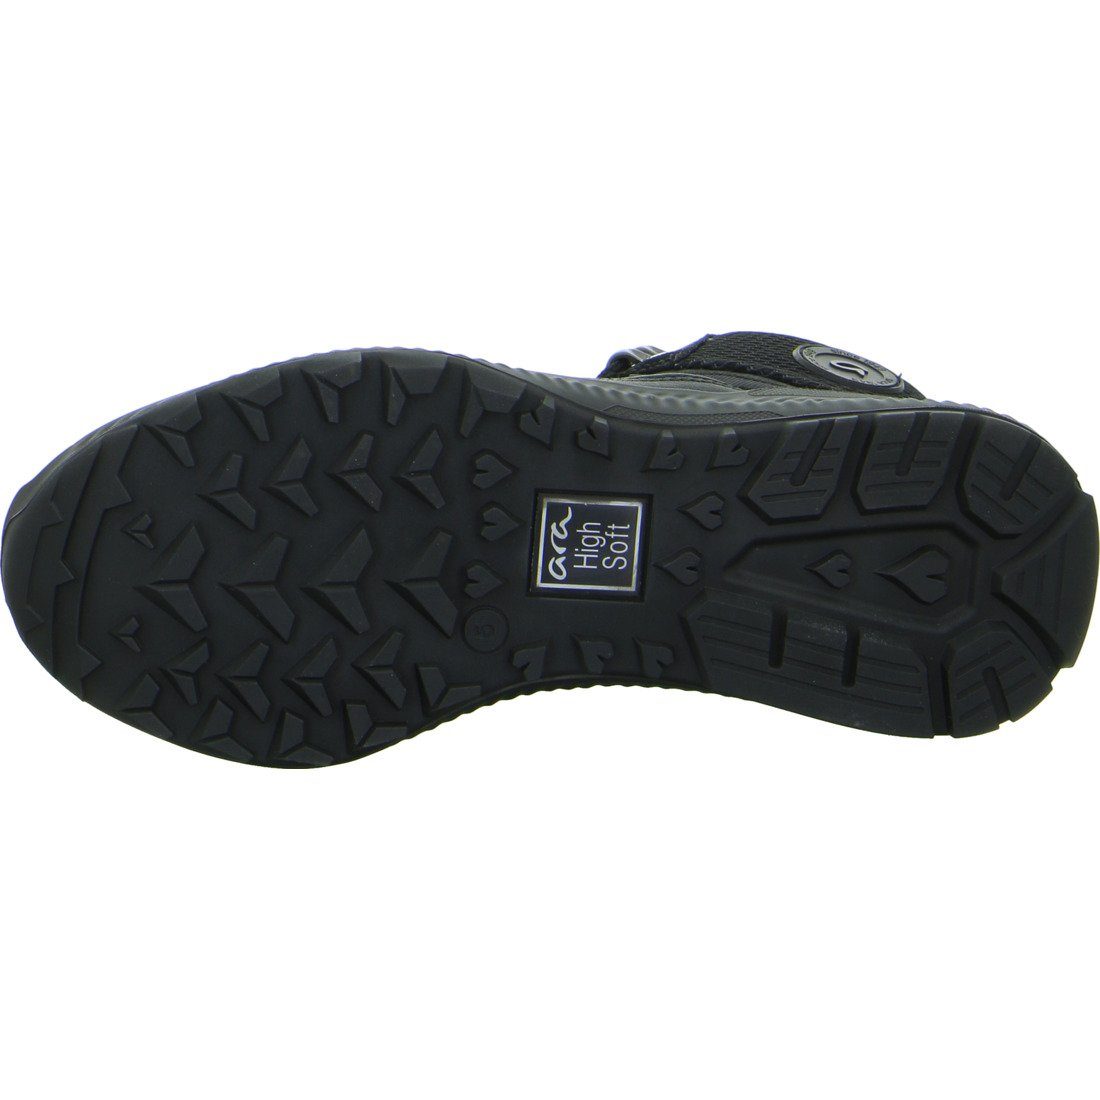 Schuhe, Ara - Damen Stiefel Leder Hiker schwarz Stiefel Ara 046746